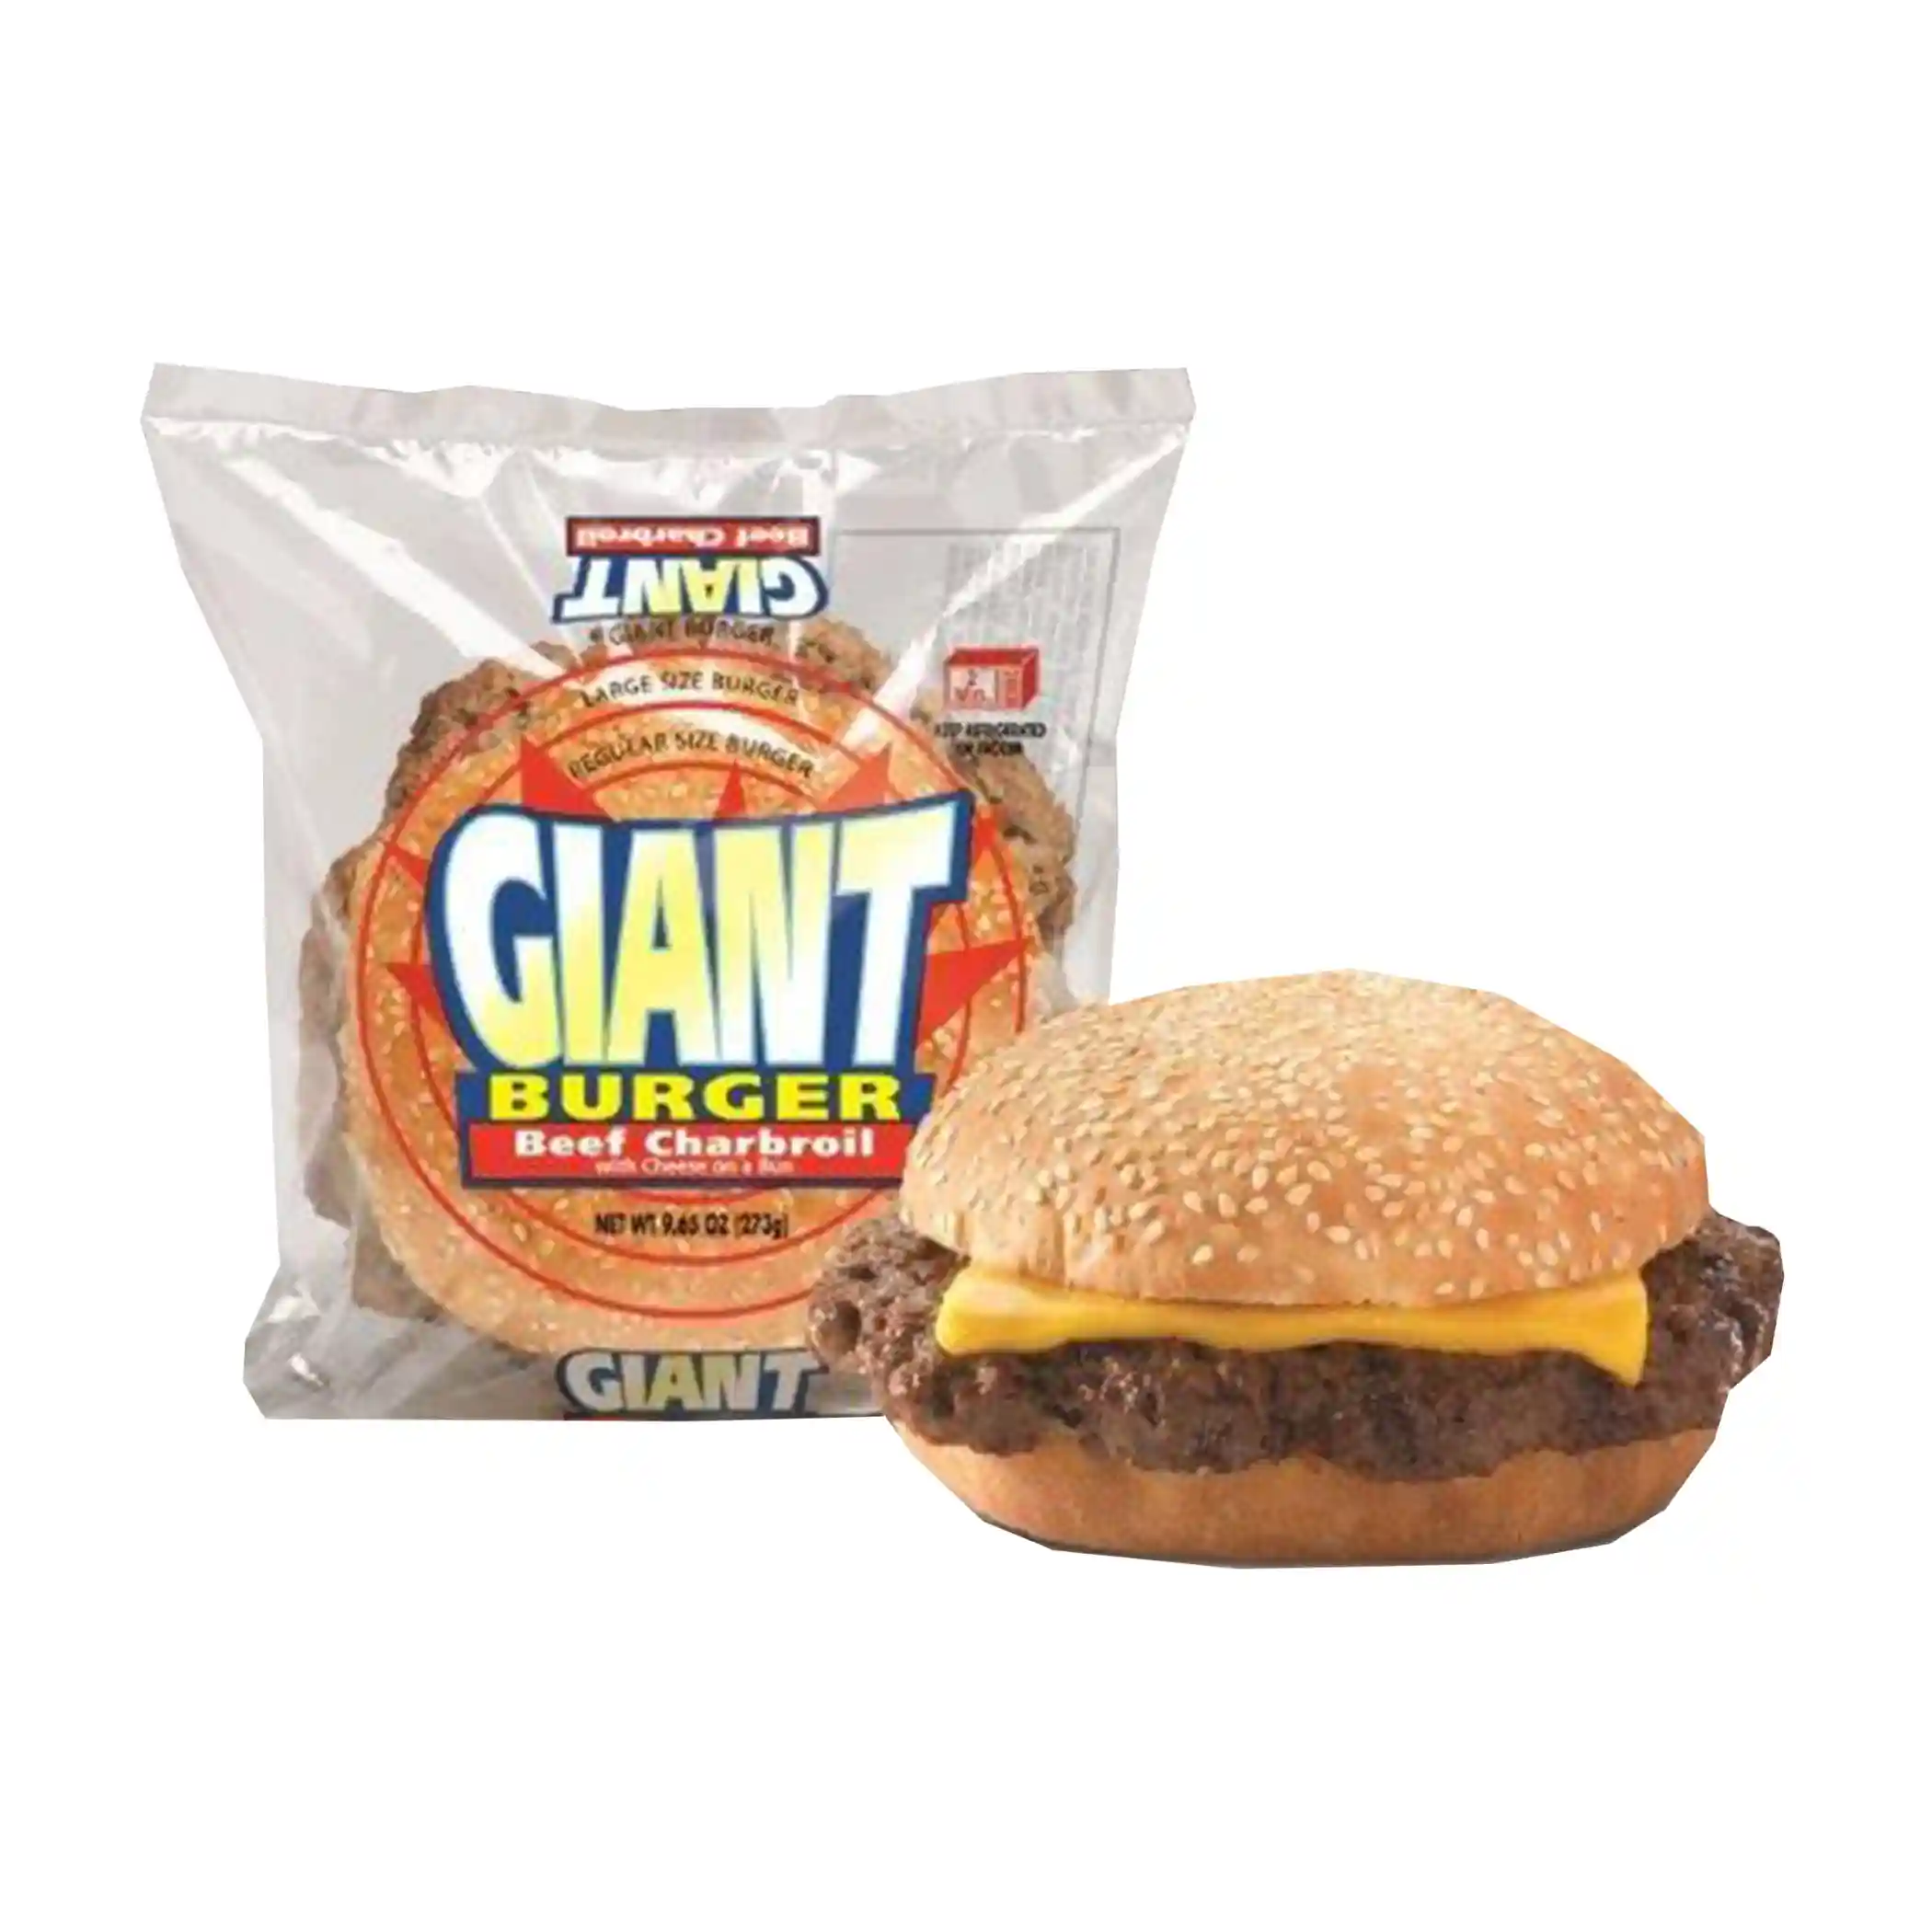 BIG AZ® Giant Charbroil Beef And Cheese Sandwichhttps://images.salsify.com/image/upload/s--eWMJiNqH--/q_25/k9r6qjf3blu7zdsudvqu.webp